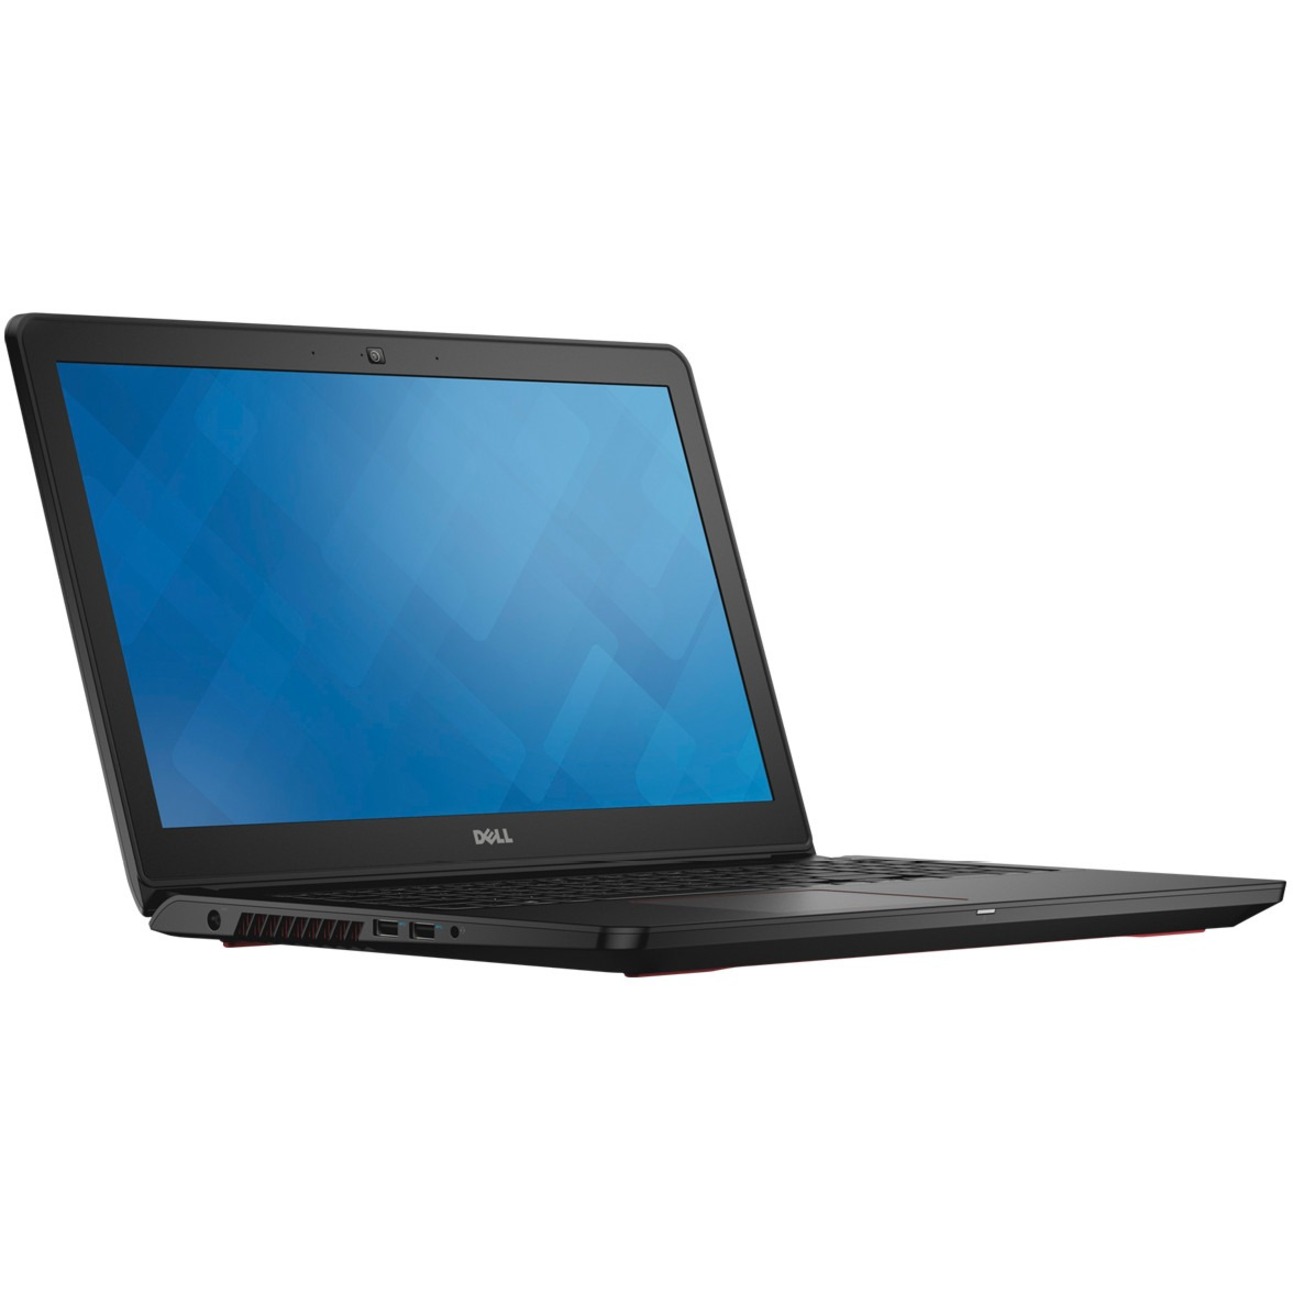 Dell Inspiron 15.6" Full HD Laptop, Intel Core i7 i7-6700HQ, 1TB HD, Windows 10 Home, 15-7559 - image 1 of 7